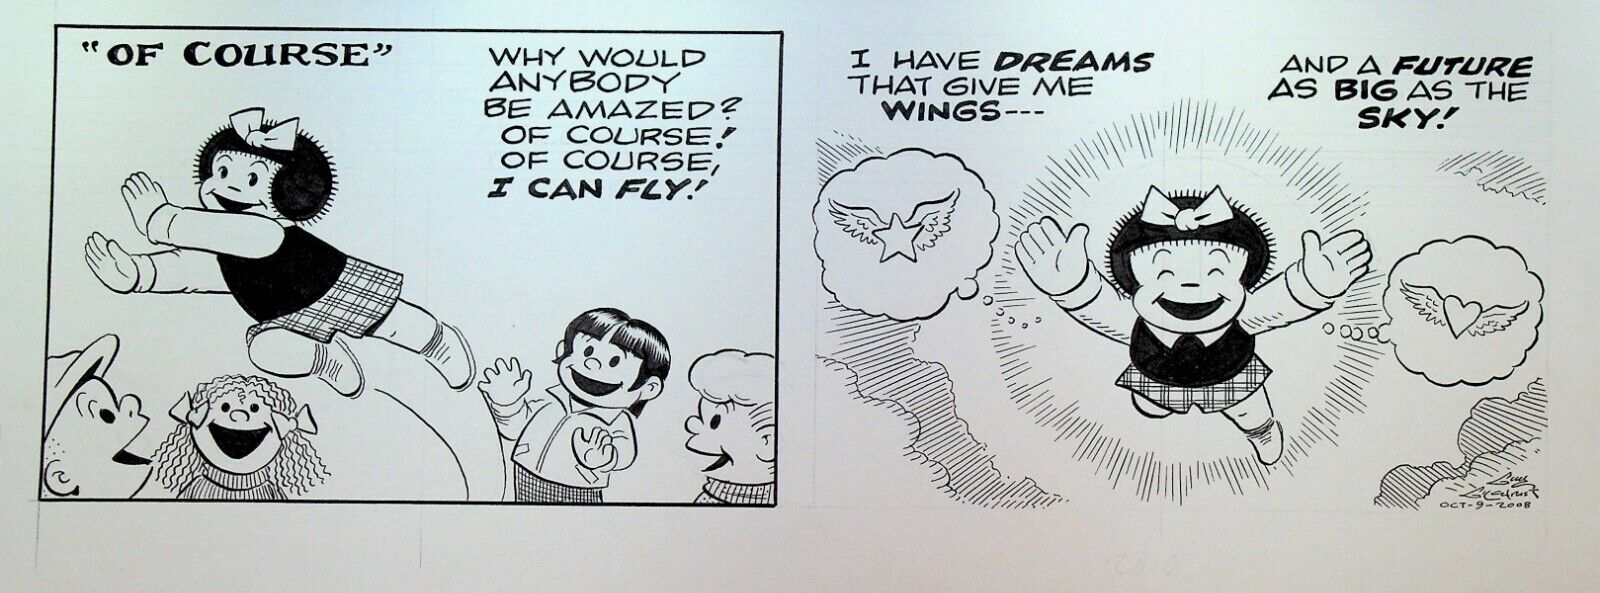 Nancy Original Comic Strip Art Guy Gilchrist October 9 2008 I Can Fly Dreams